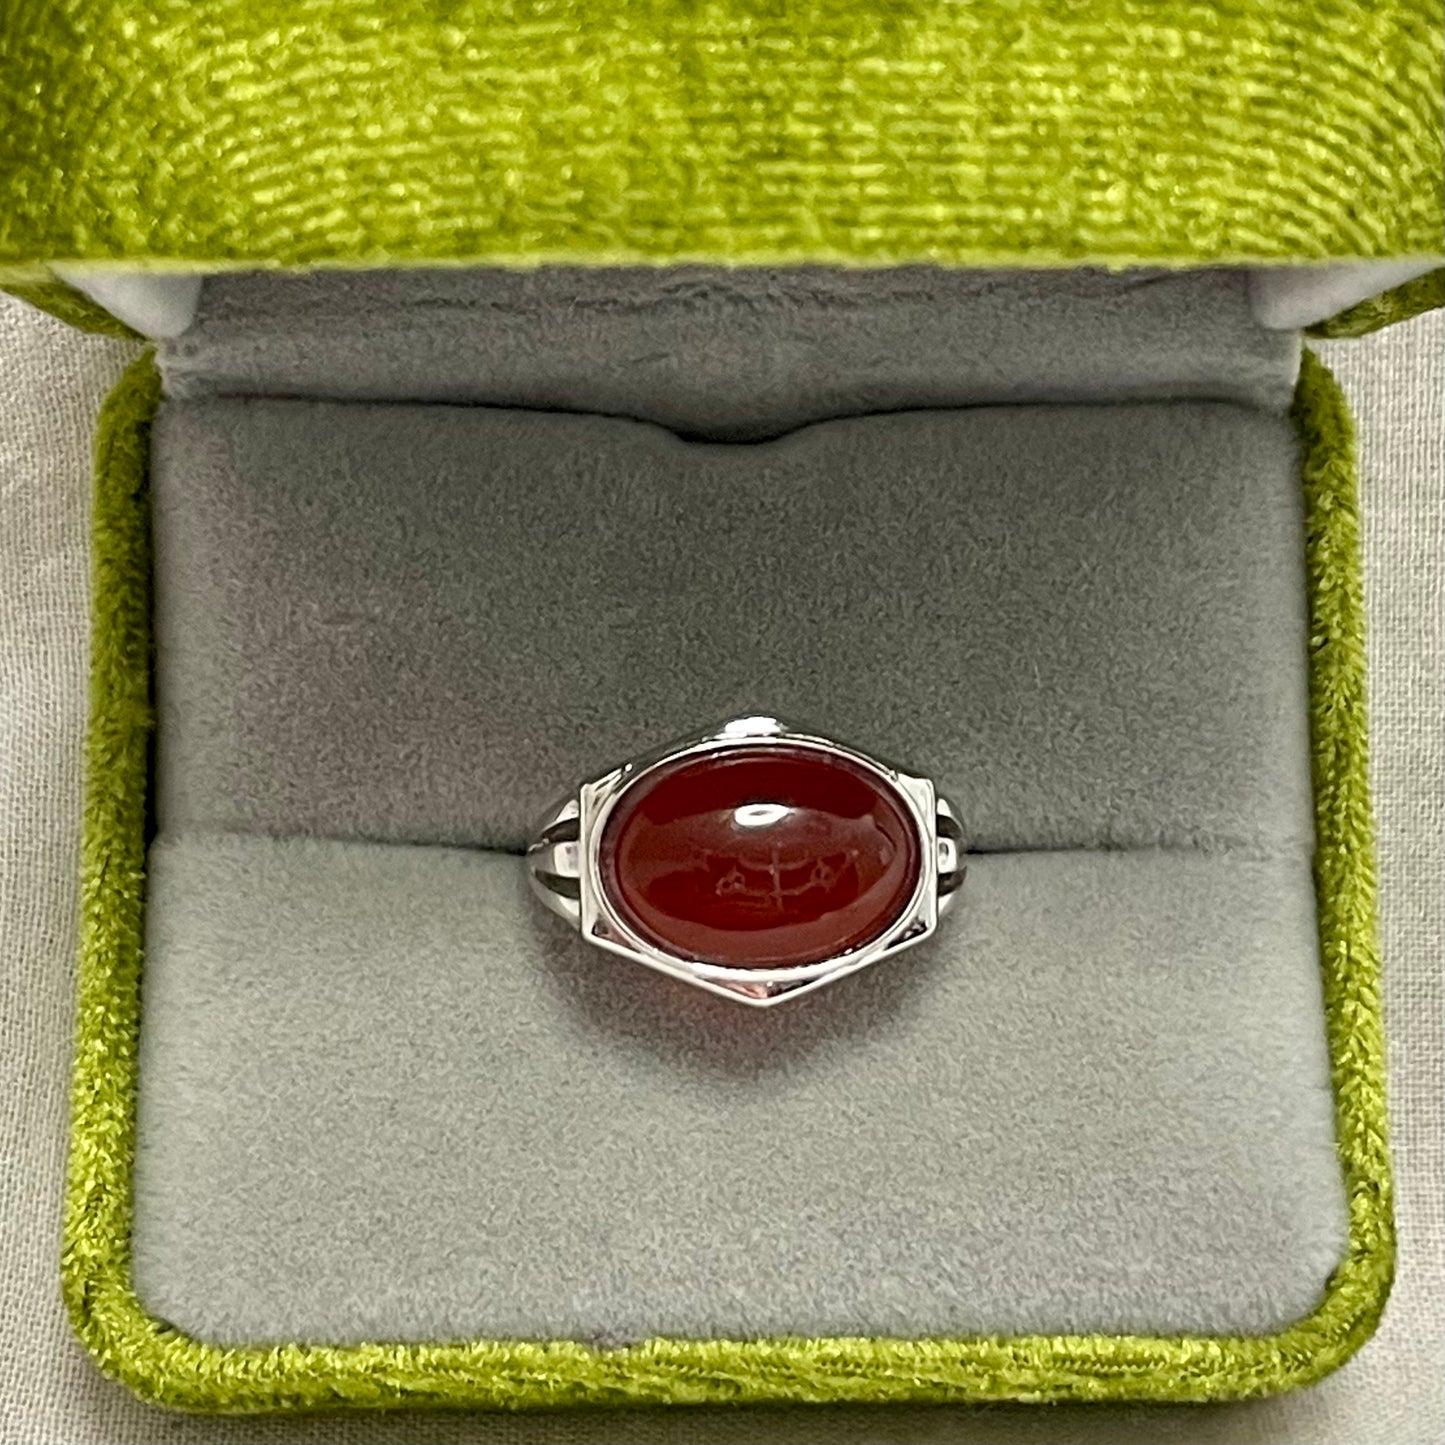 Constancy - Bahá’í ring with ringstone symbol